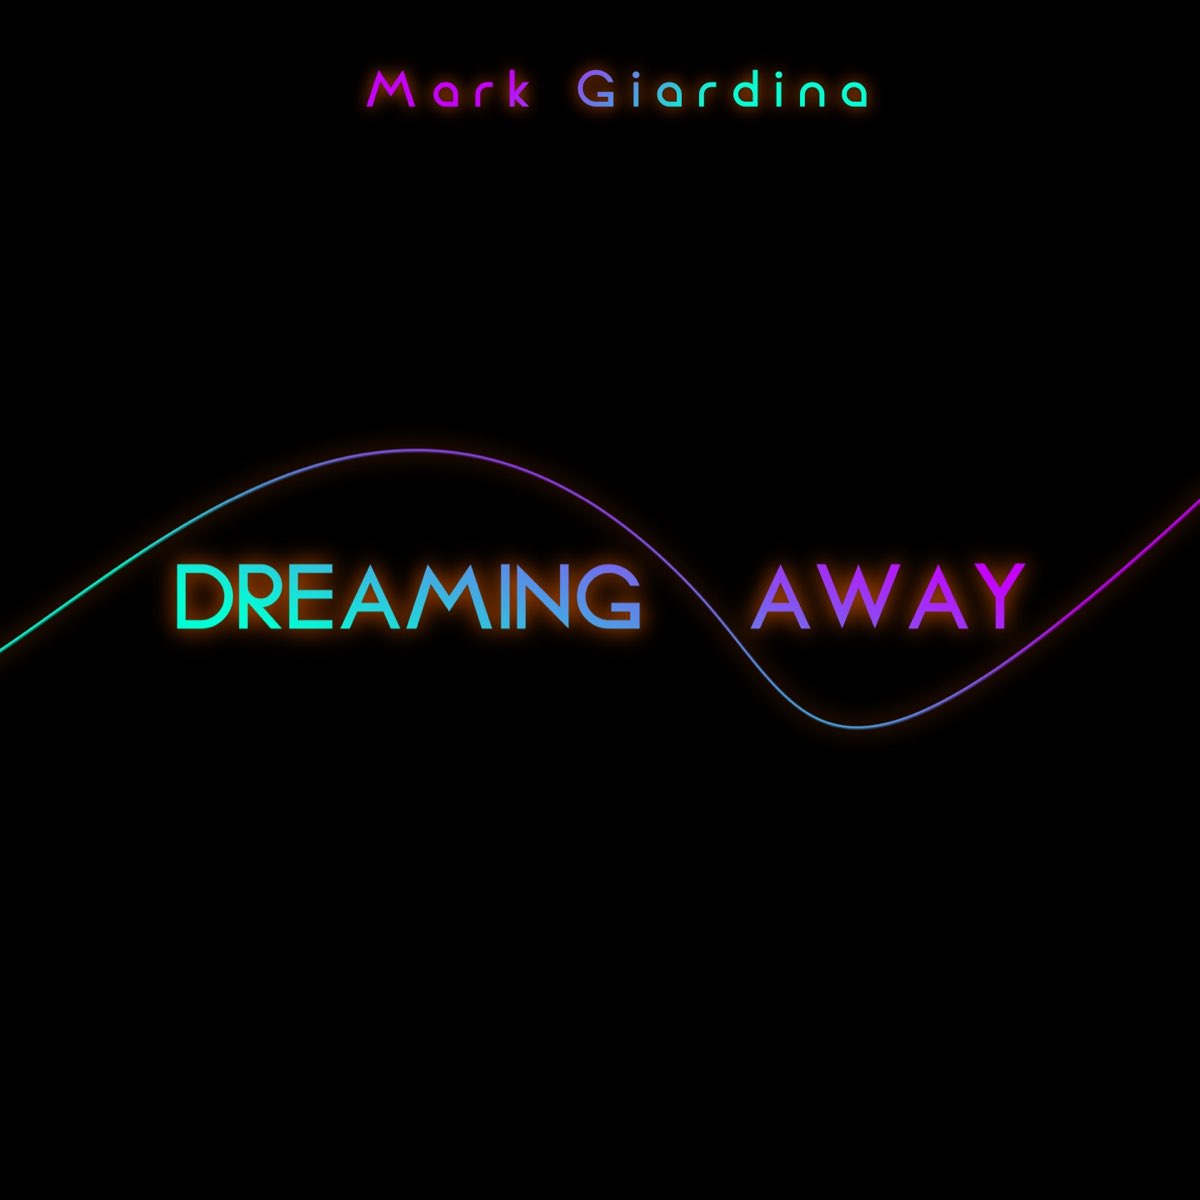 Future mark. Dreaming away. Dream away.